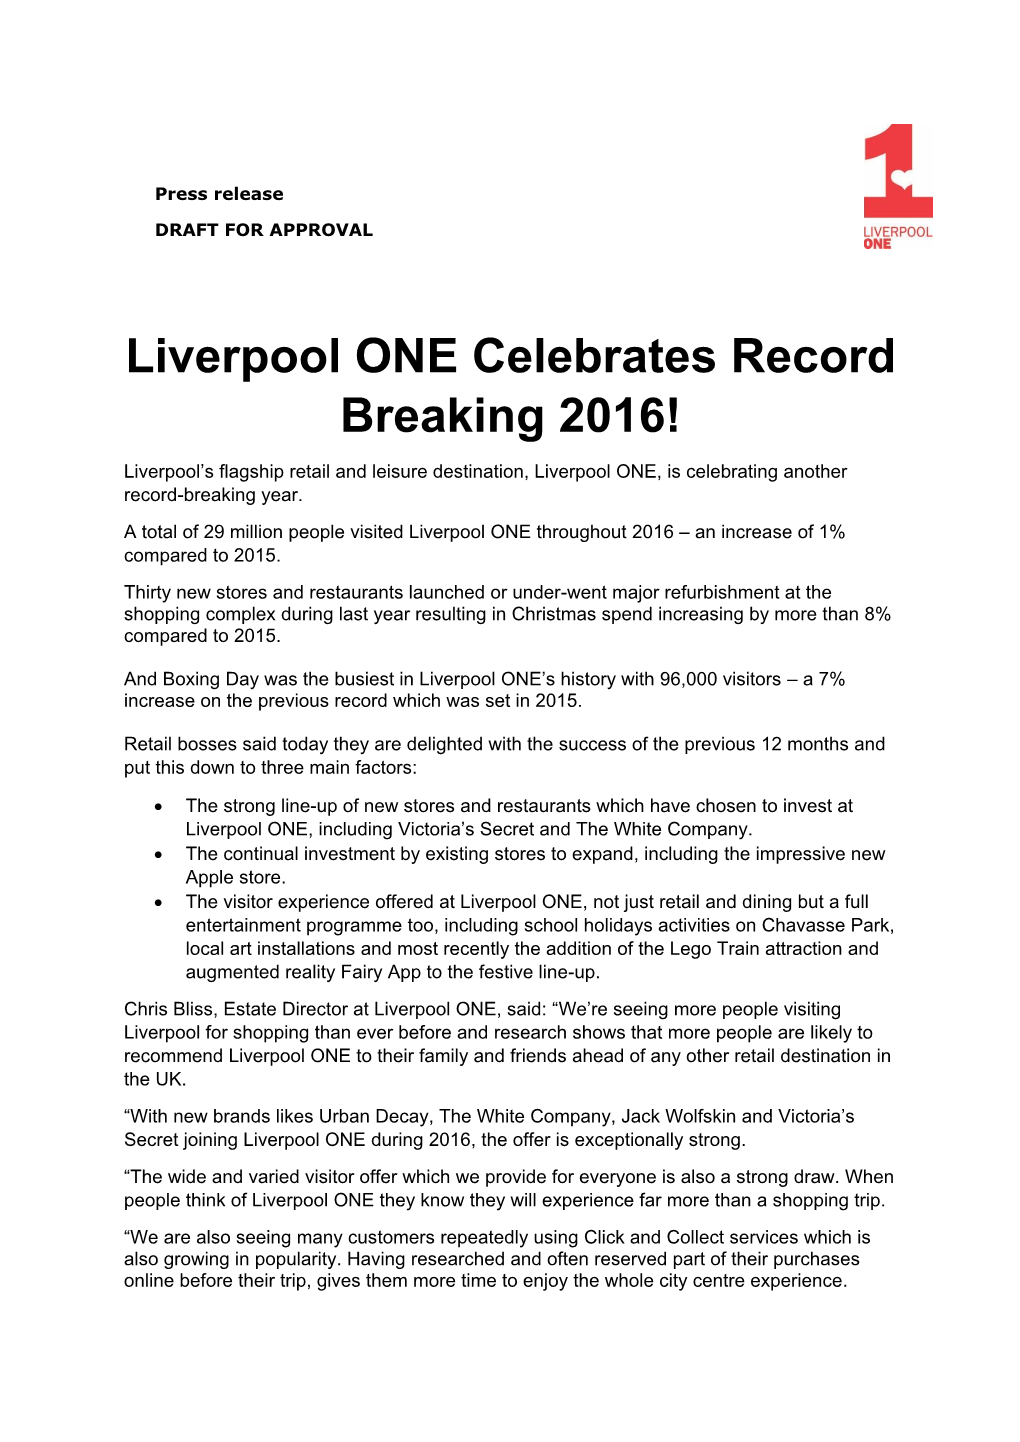 Liverpool ONE Celebrates Record Breaking 2016!